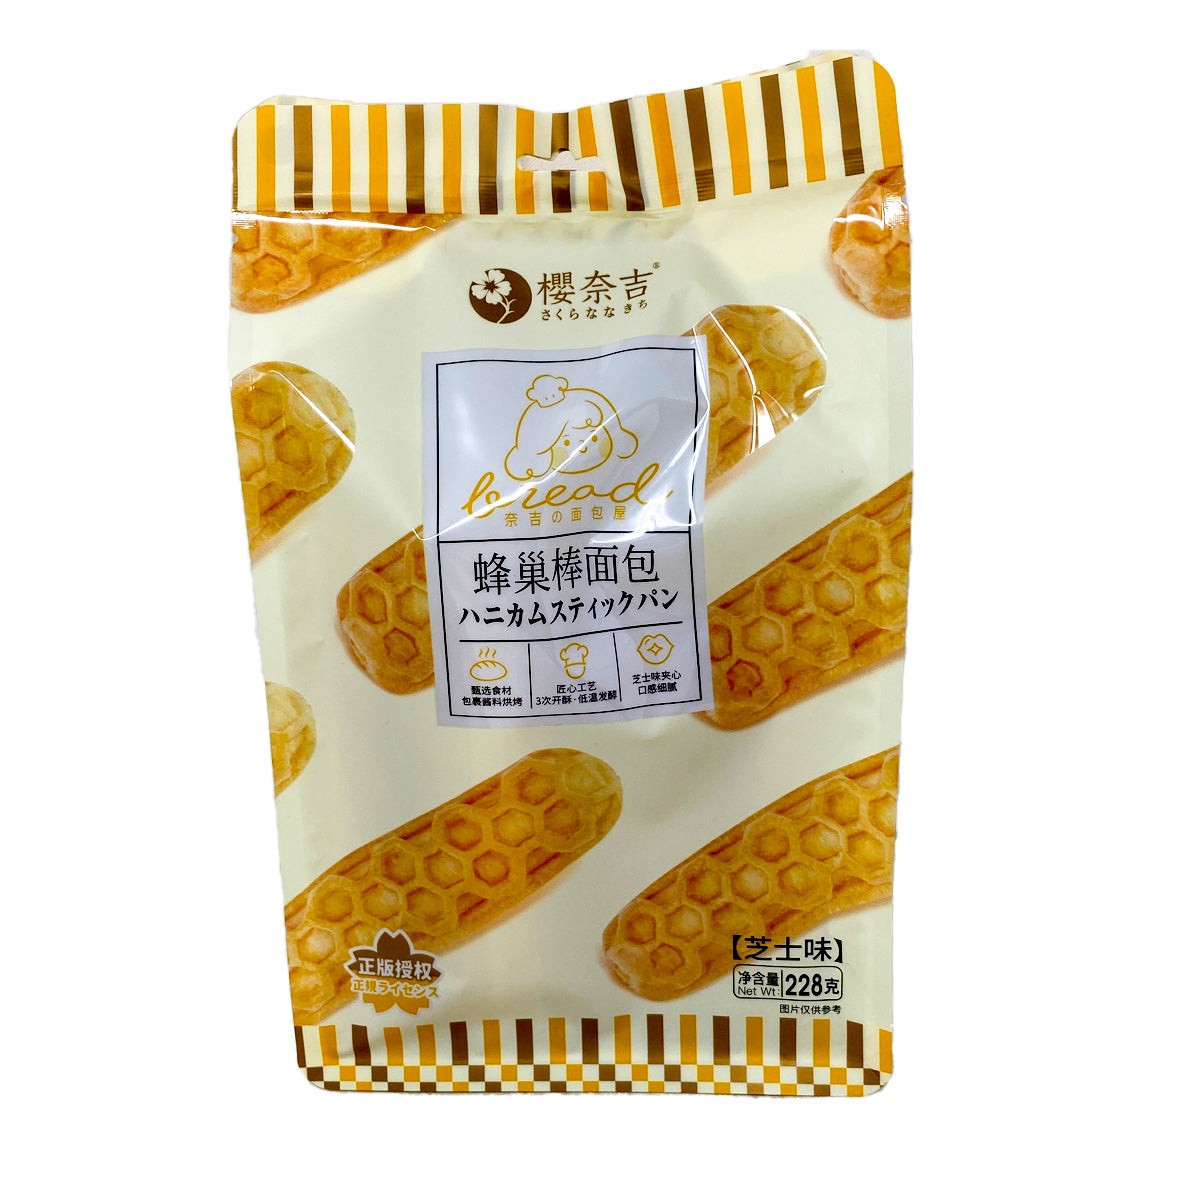 honeycomb-bread-cheese-flavor